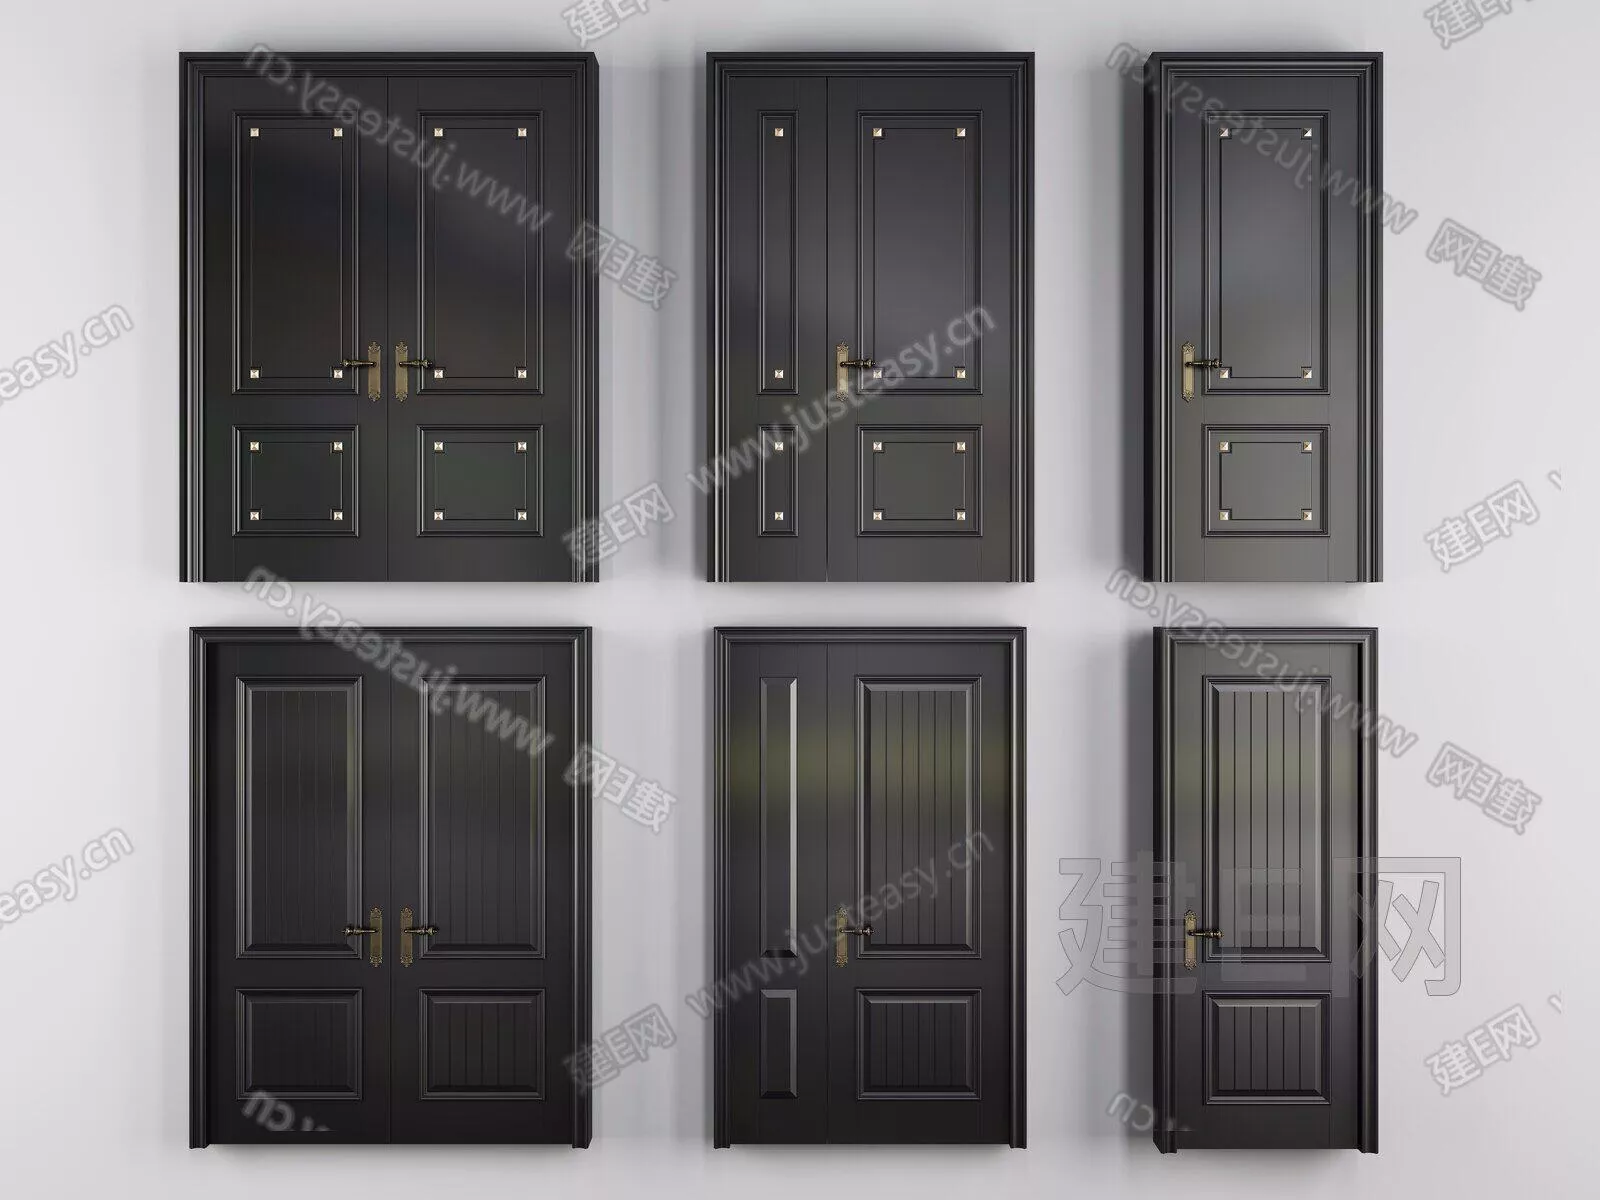 MODERN DOOR AND WINDOWS - SKETCHUP 3D MODEL - ENSCAPE - 111496552